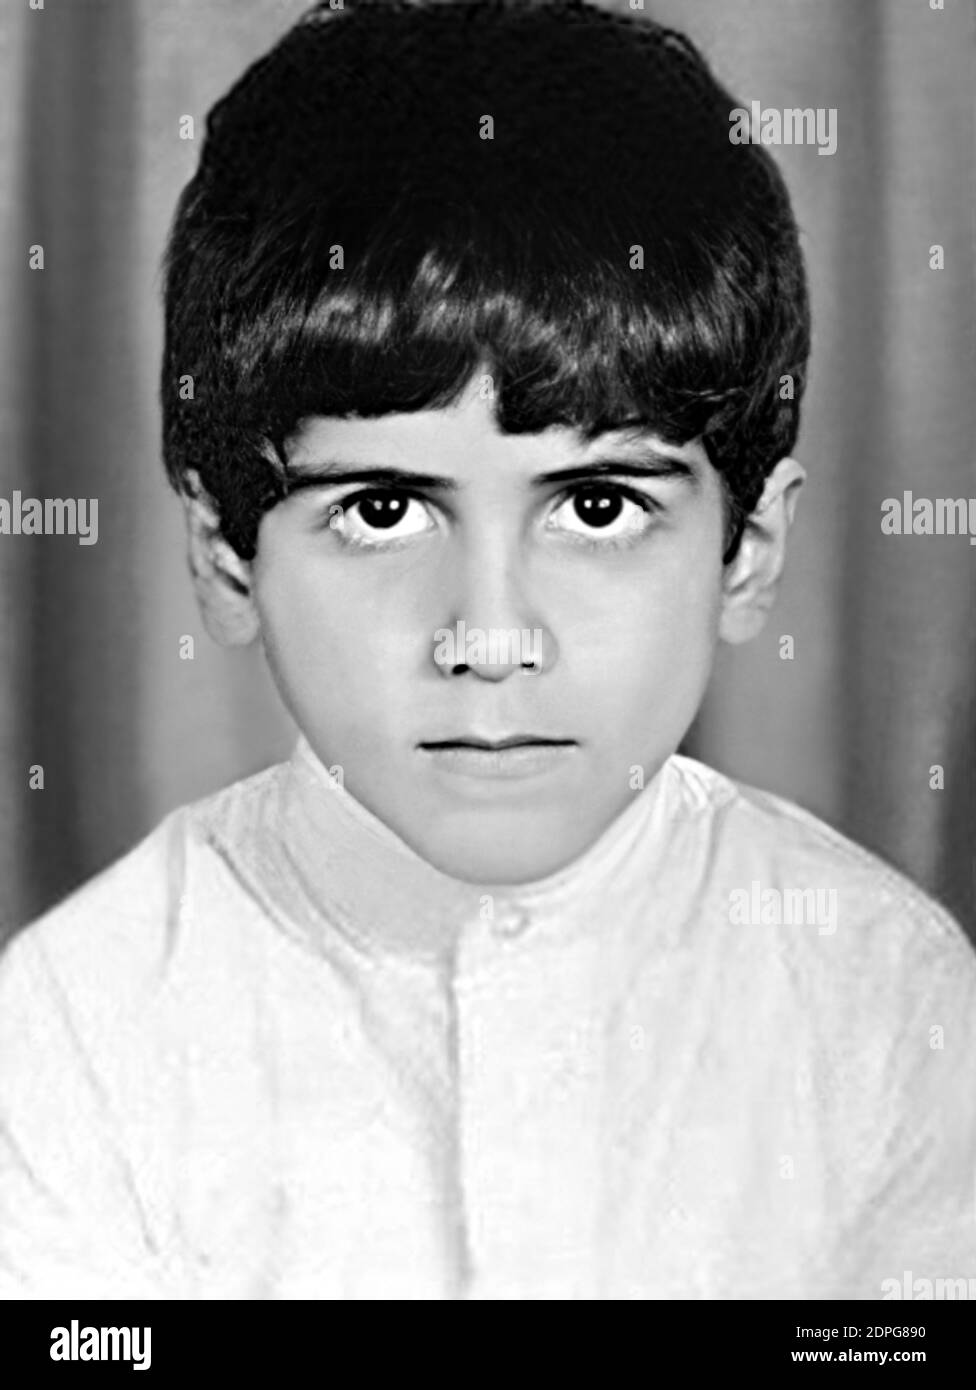 osama bin laden as a young man